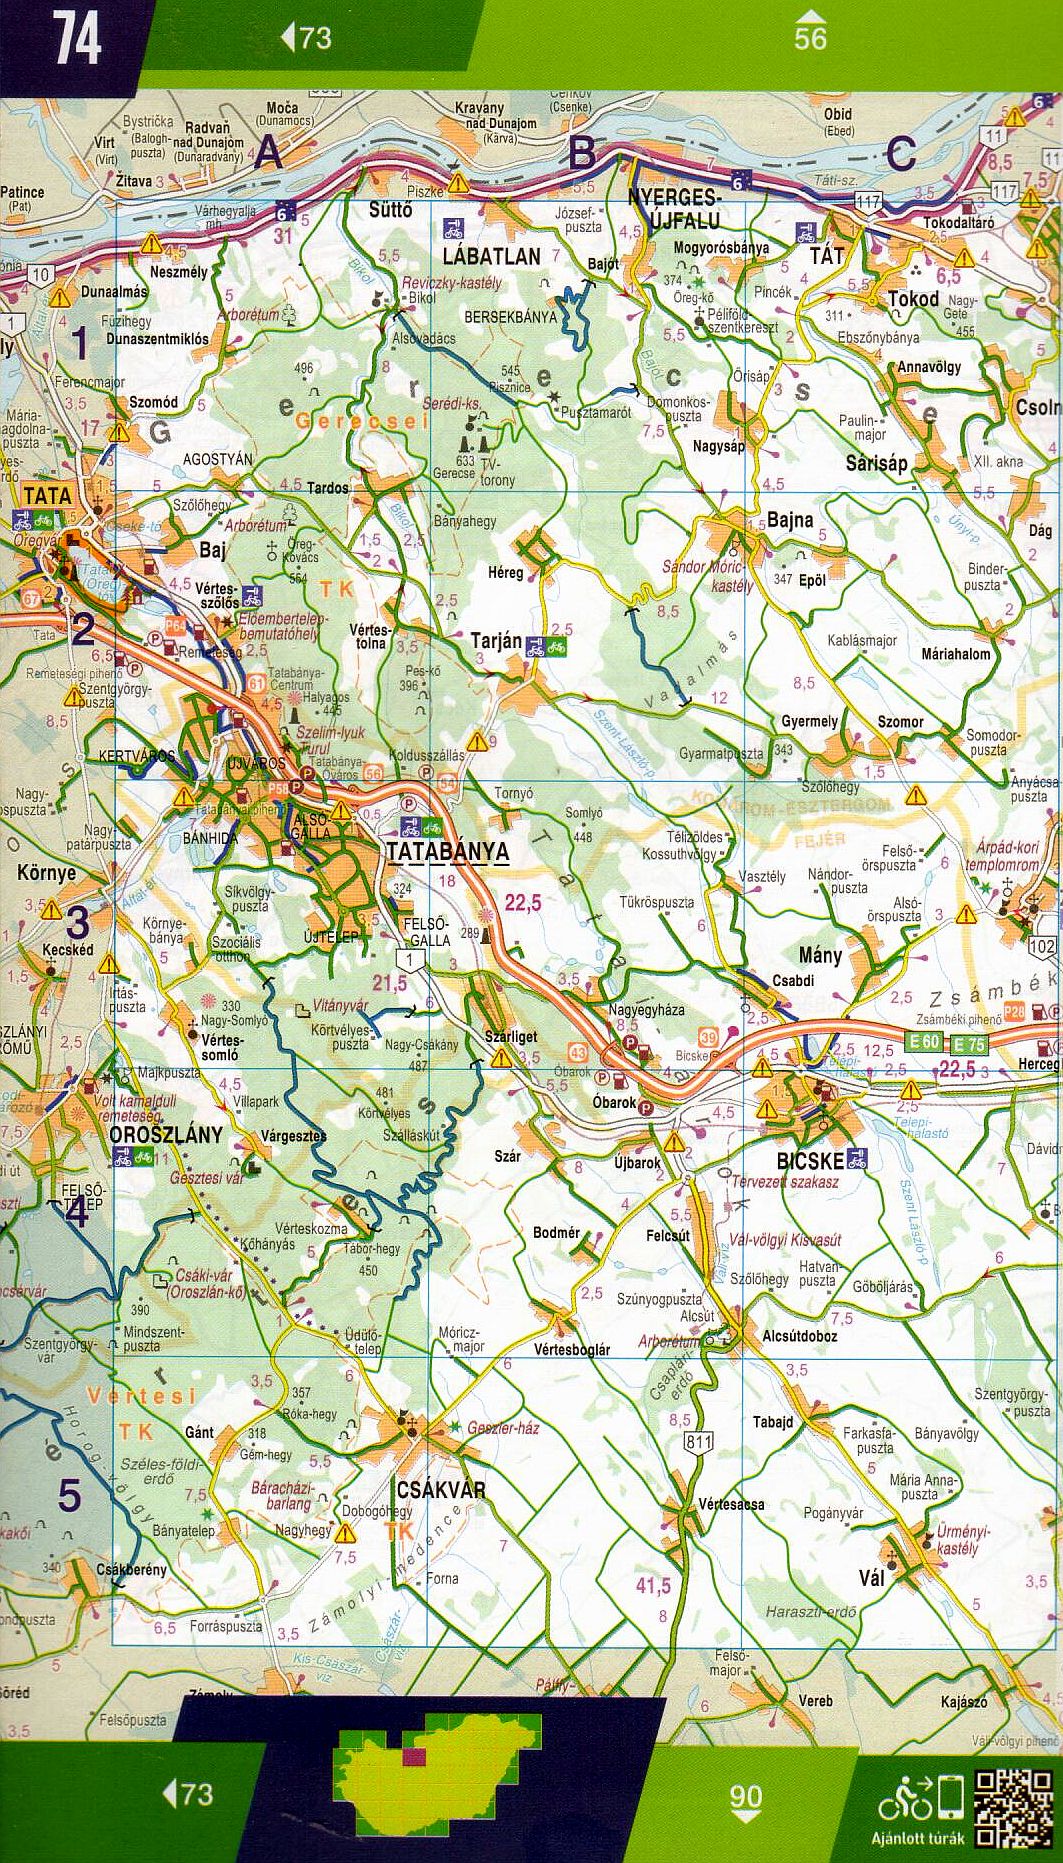 Hungary cycling guide/atlas: map sample 1